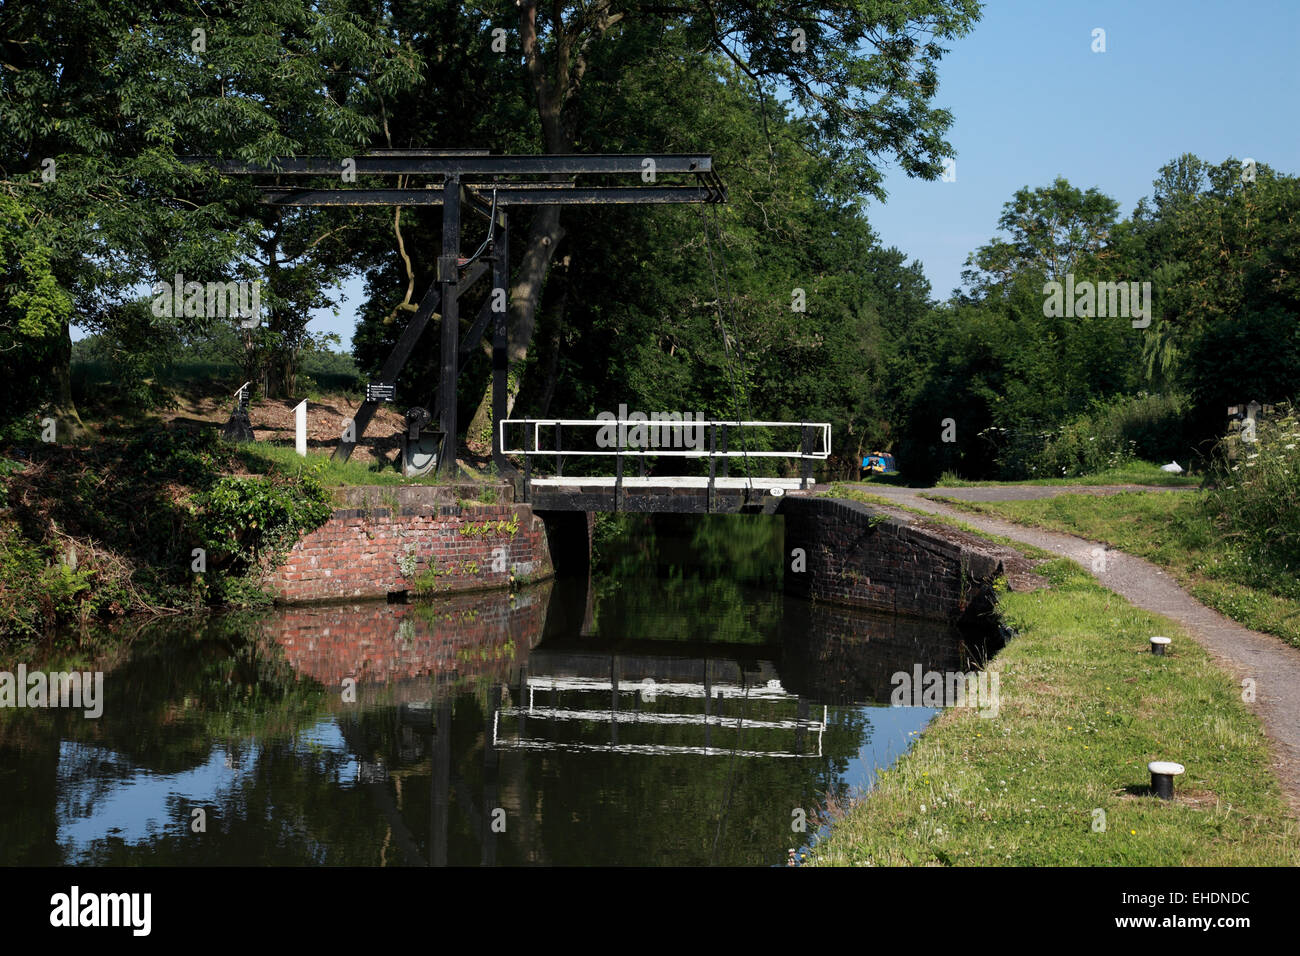 The draw bridge / lift bridge at Hockley Heath on the Stratford on Avon Canal Stock Photo